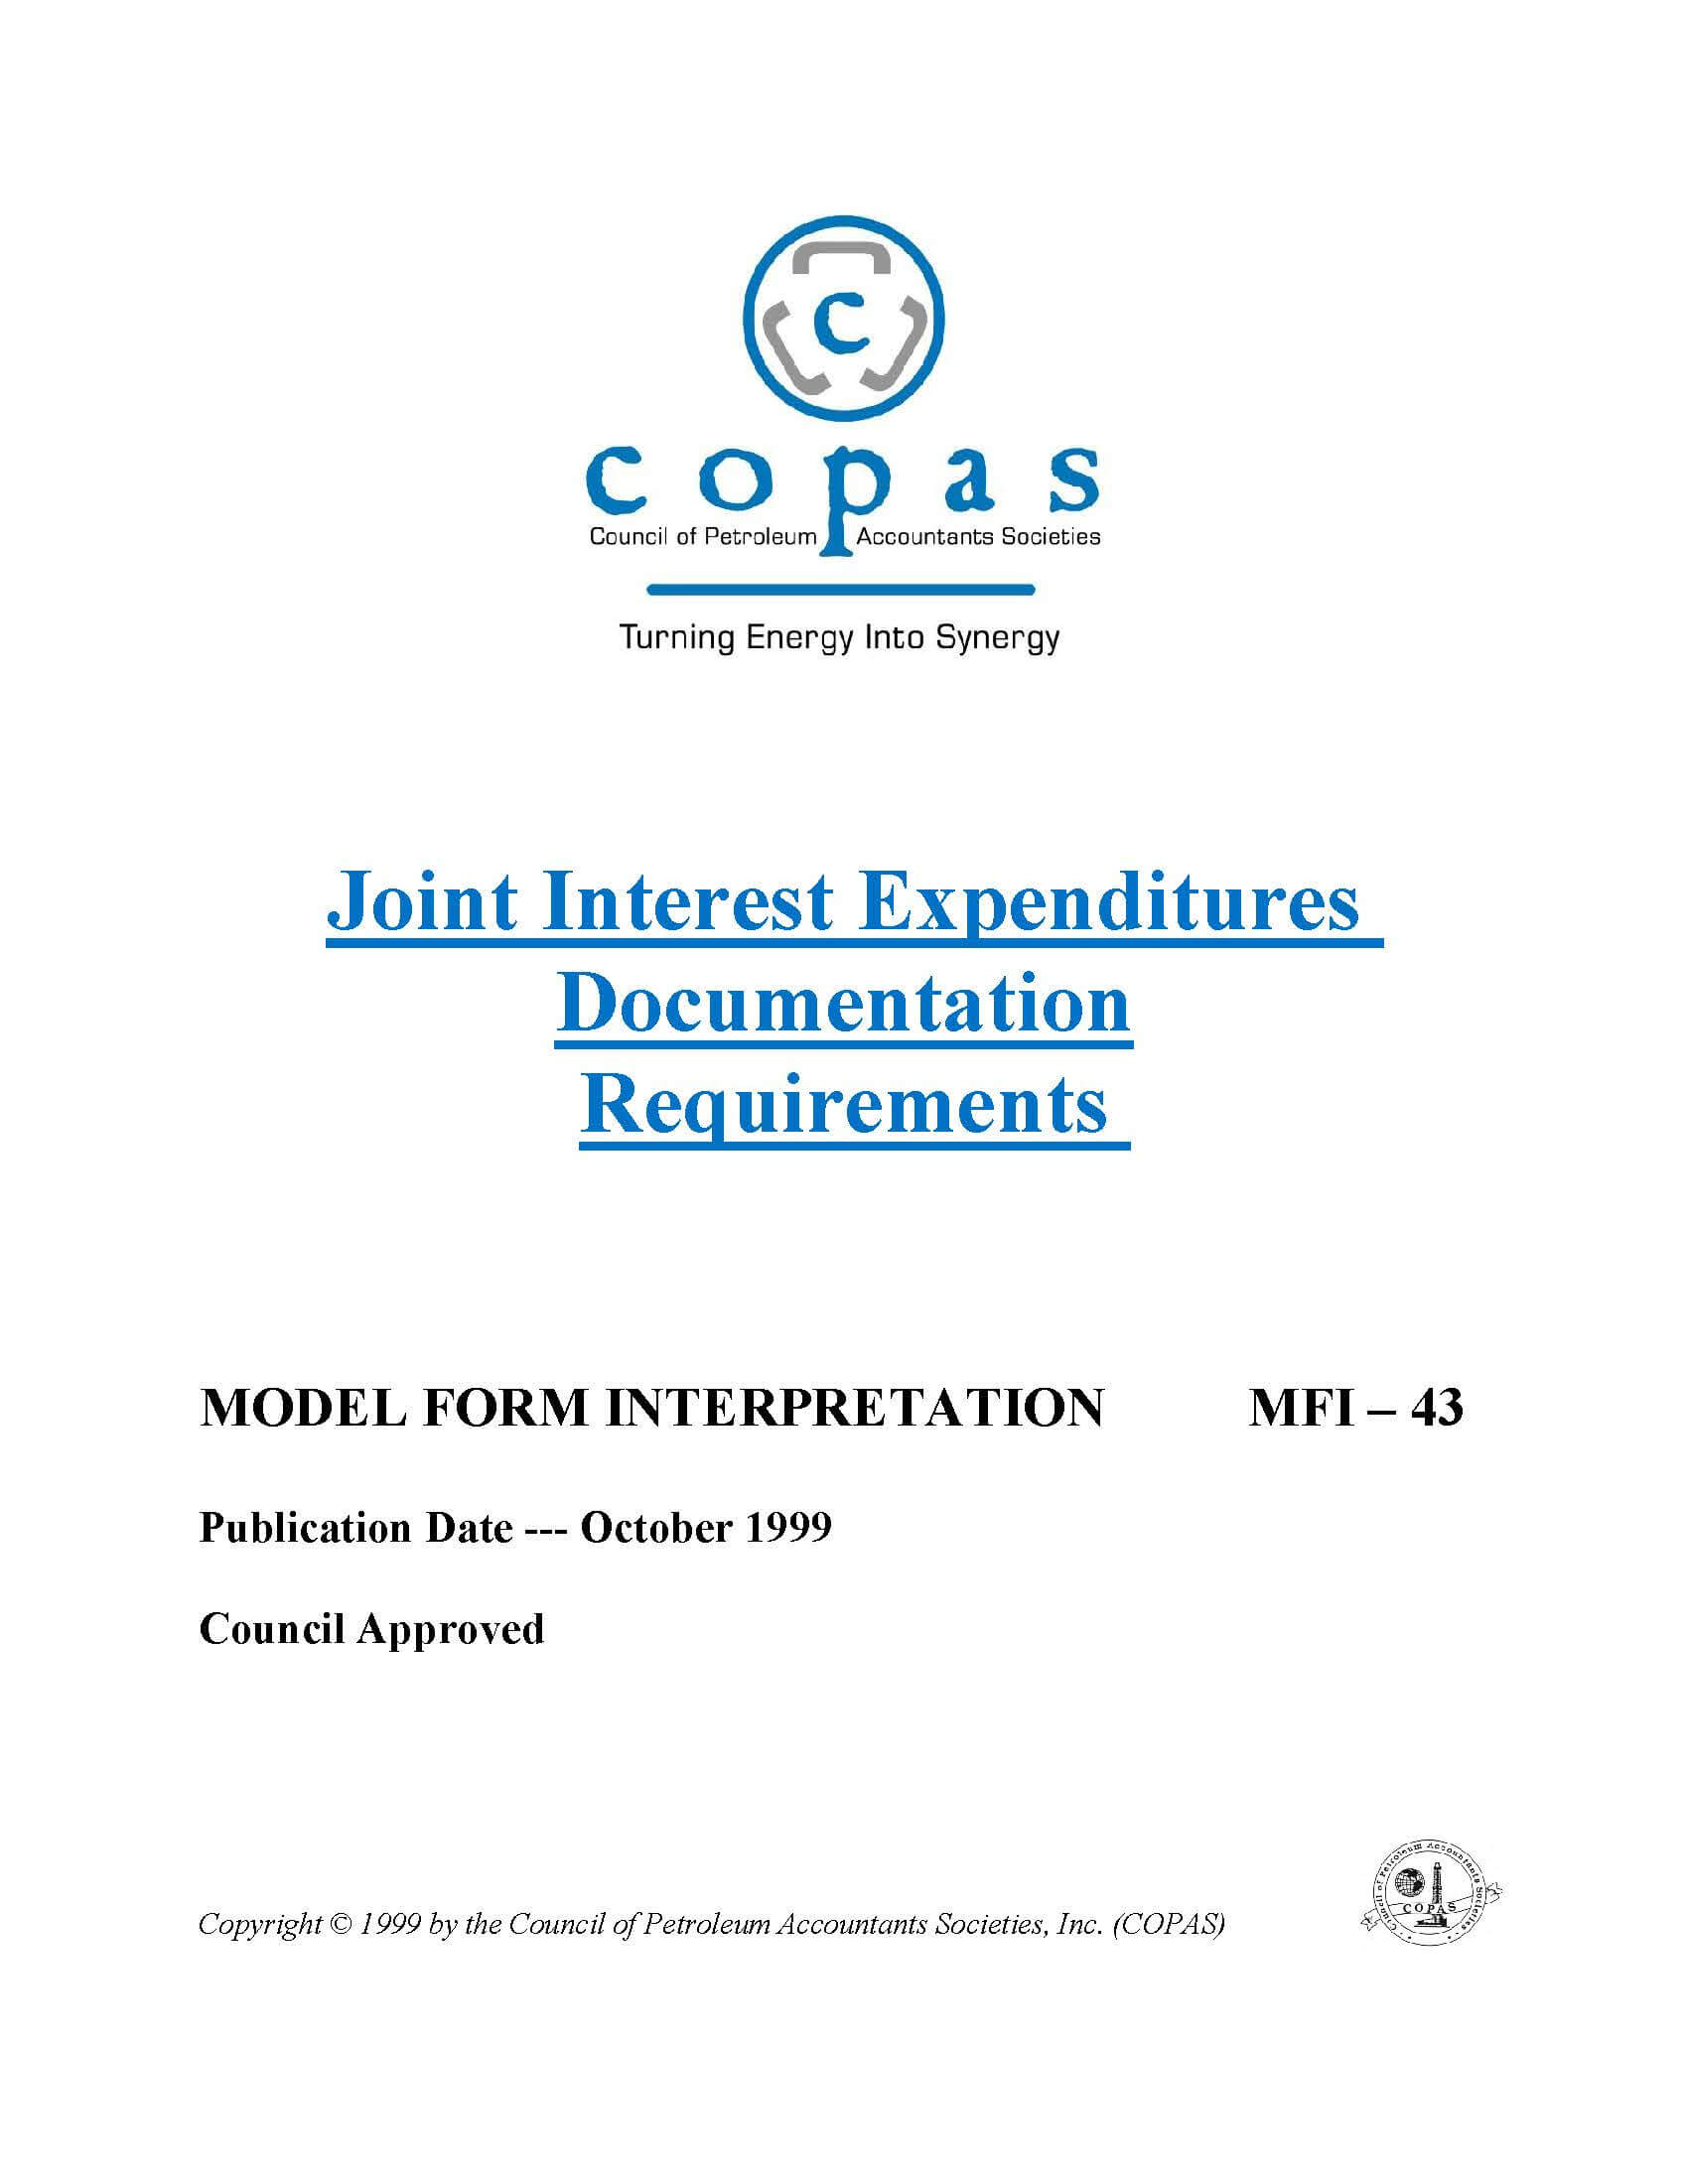 MFI-43 Joint Interest Expenditures Documentation Requirements - products MFI 43 Joint Interest Expenditures Documentation Requirements - Council of Petroleum Accountants Societies